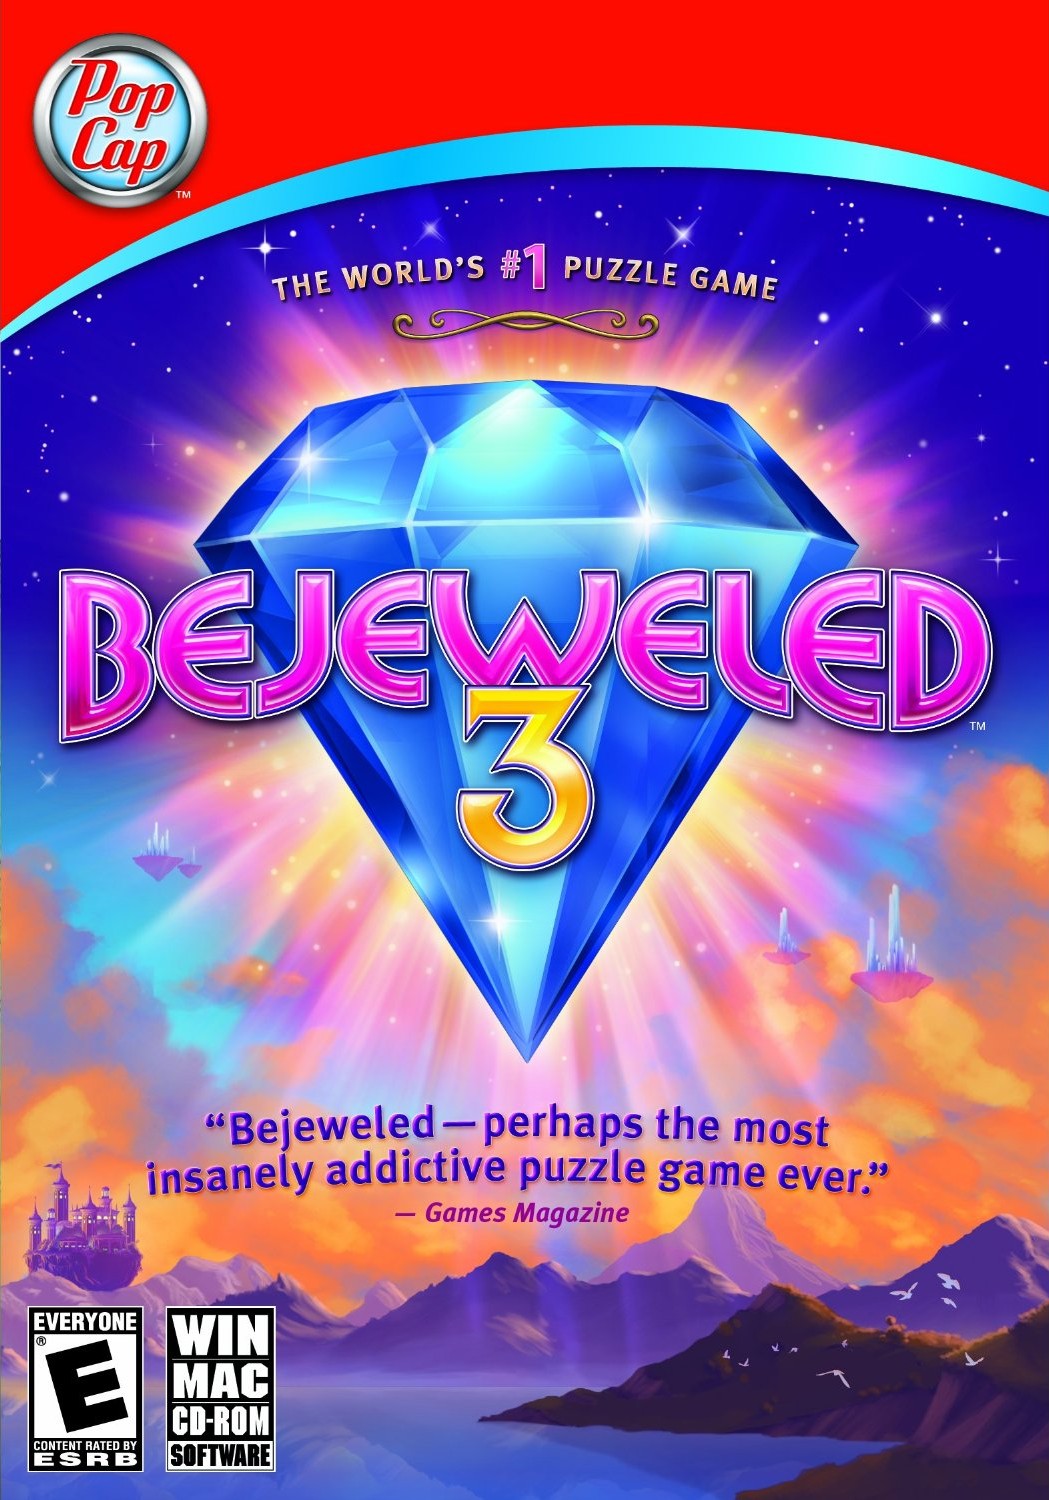 bing free games bejeweled 3